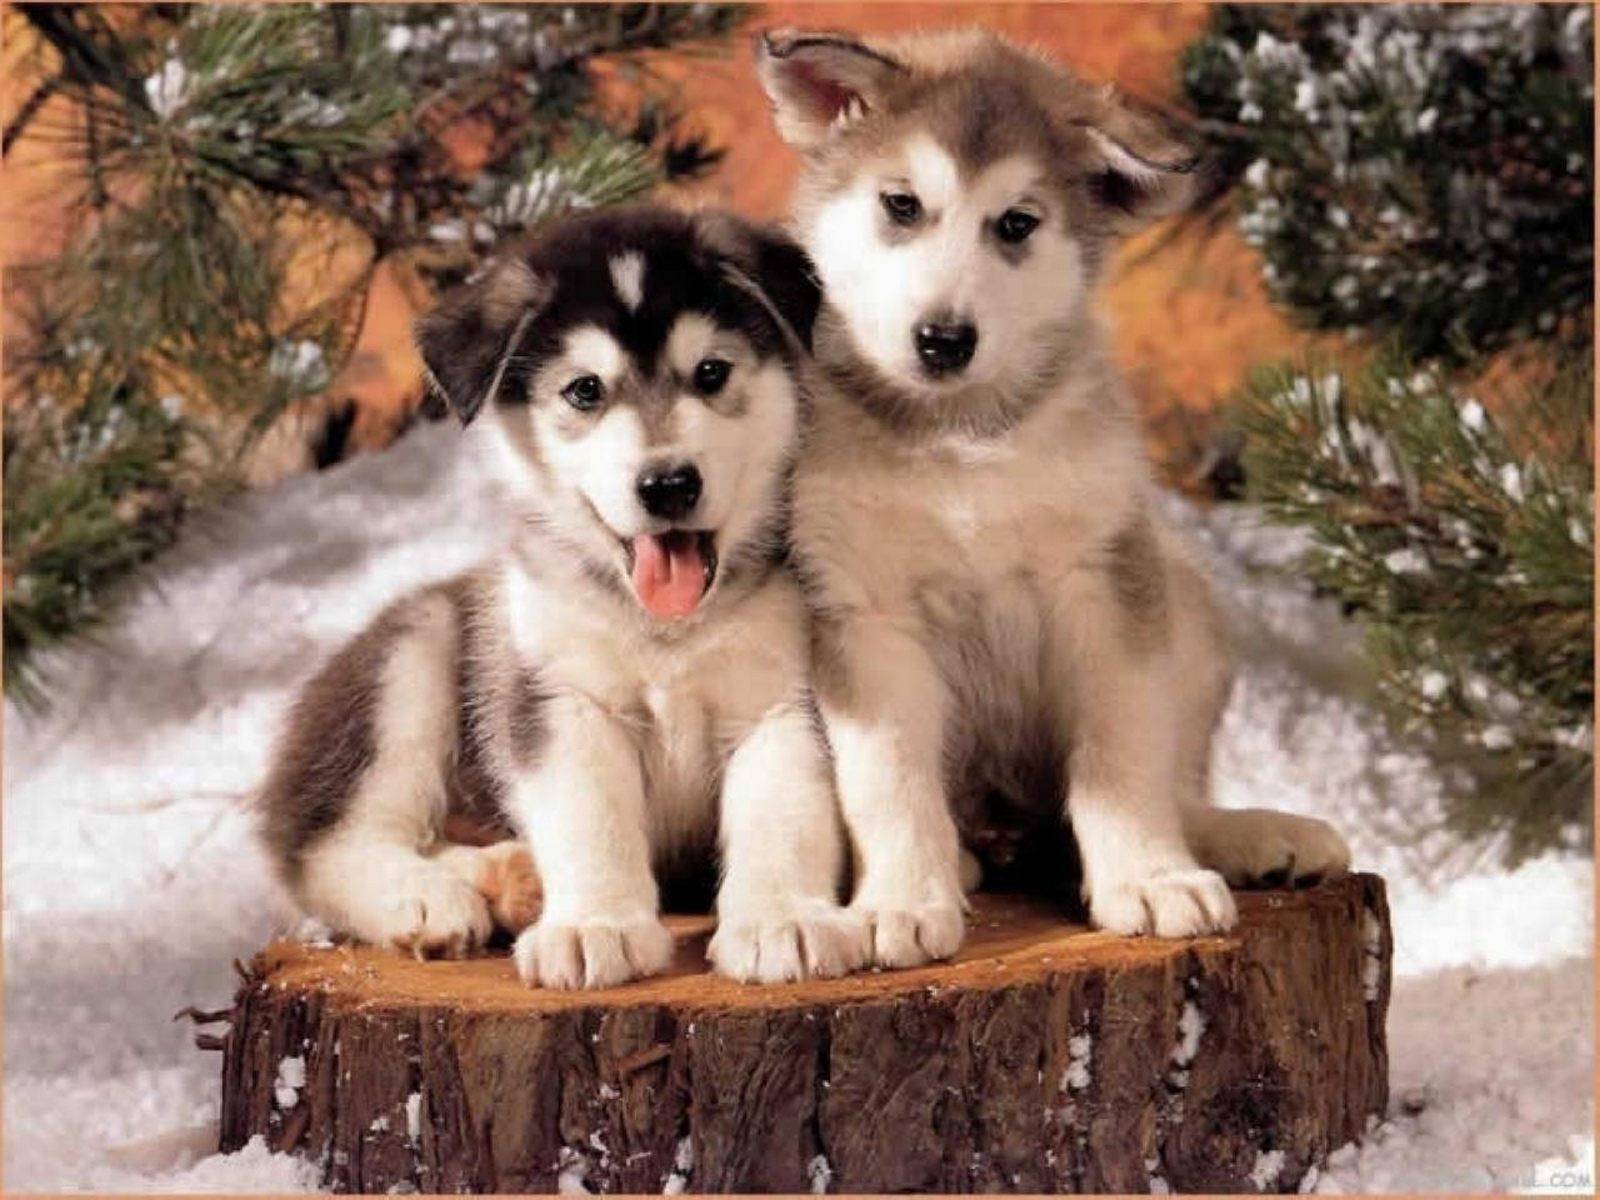  stuffpoint animals husky images wallpapers husky cute puppies tweet